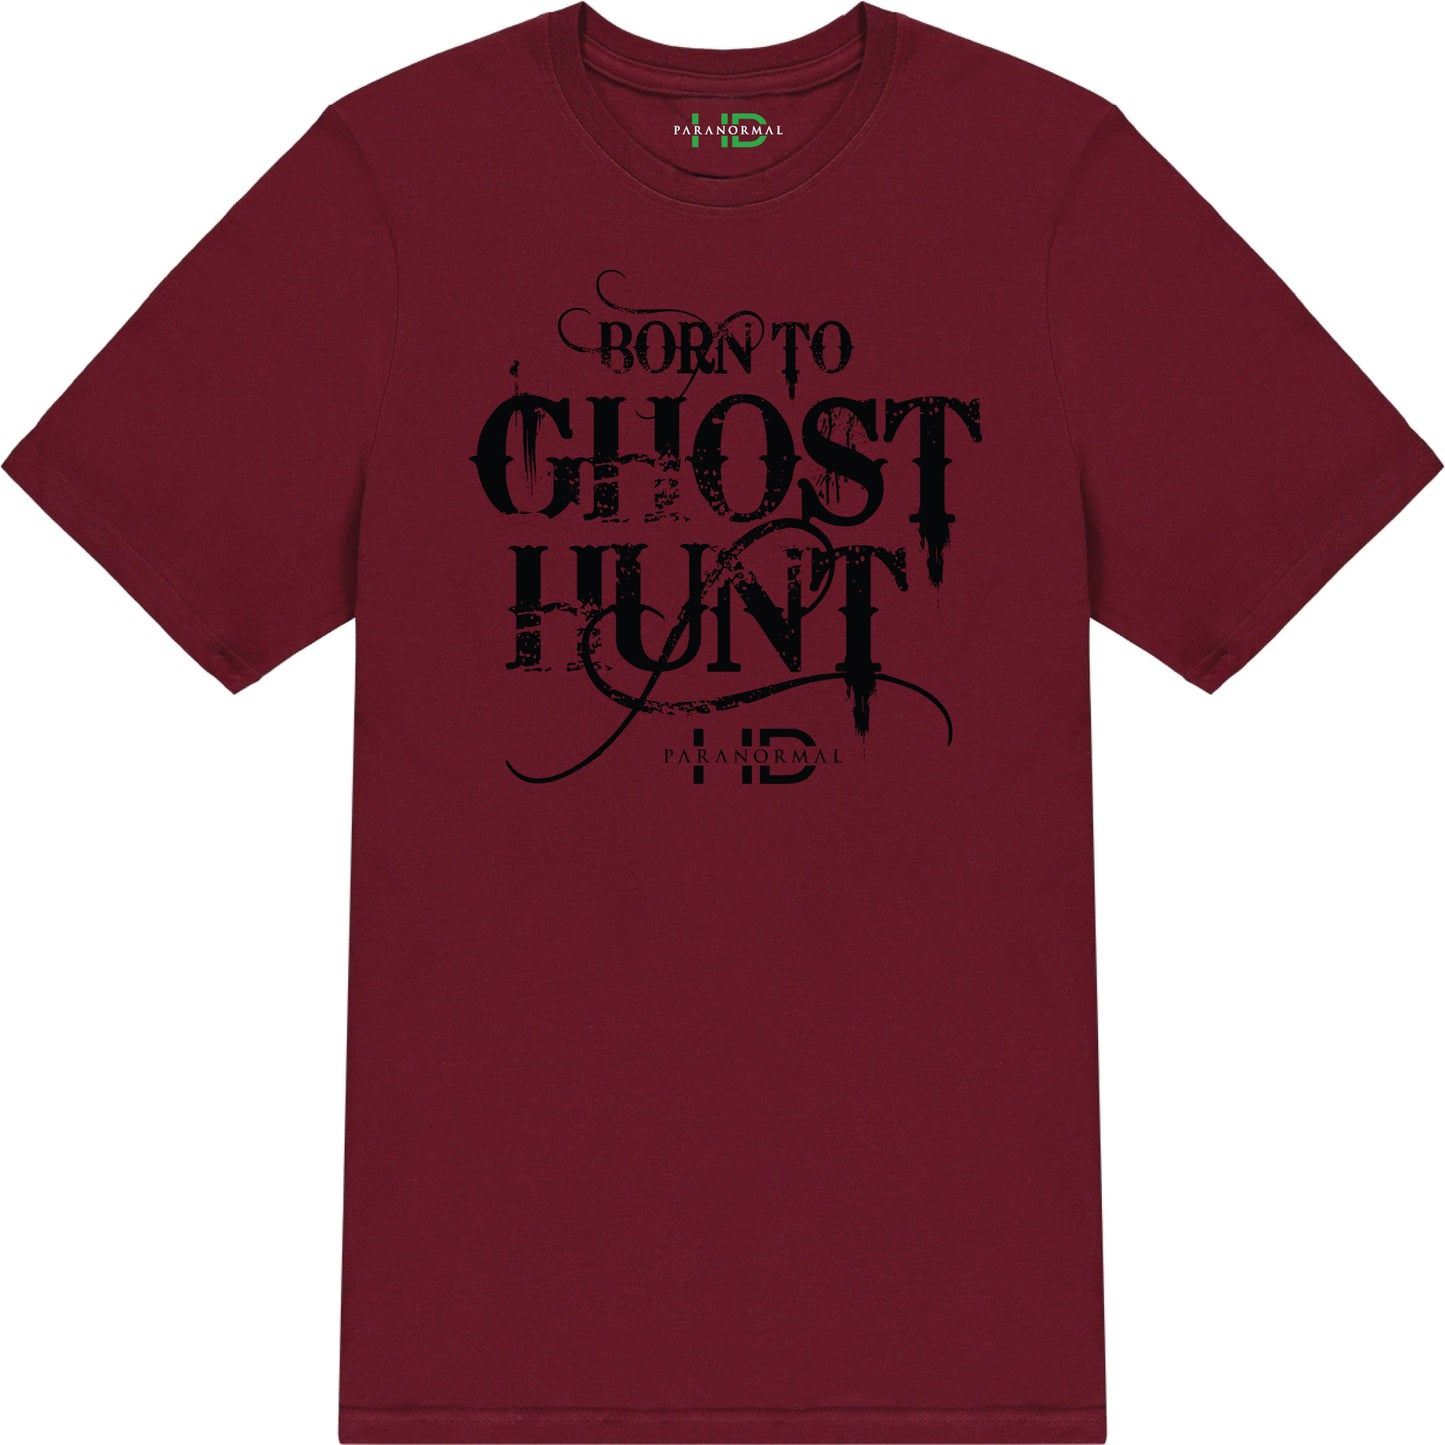 Born To Ghost Hunt - Big Print T-Shirt